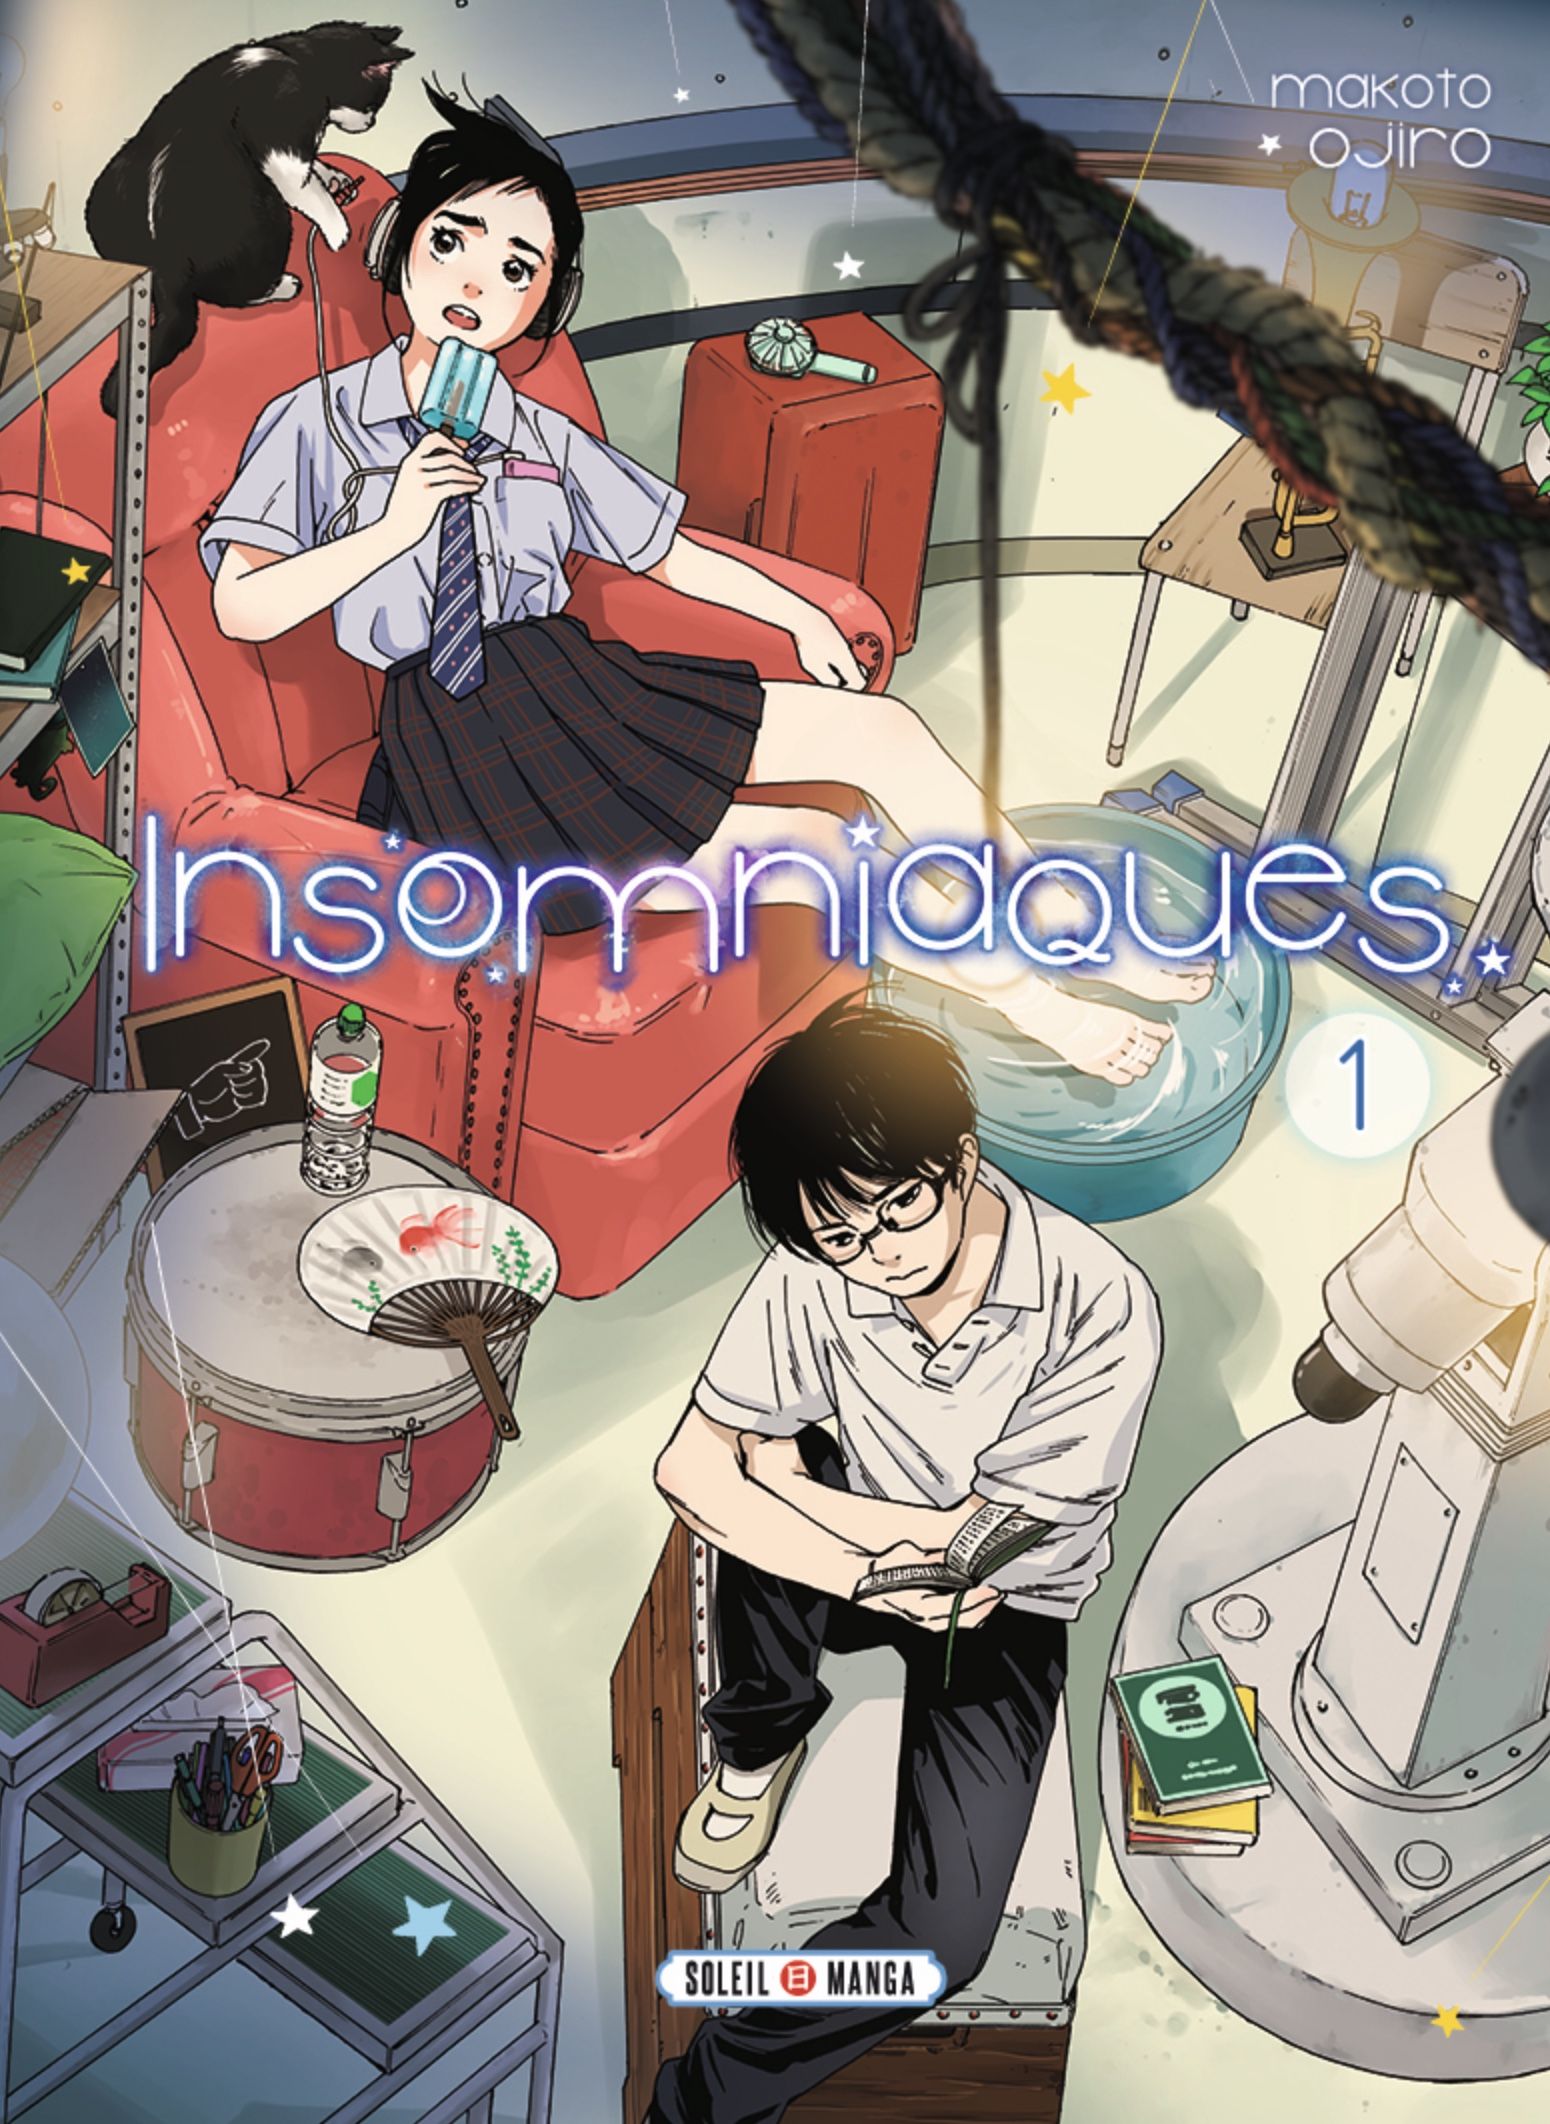 Tag cooking sur Manga-Fan Insomniaques-1-soleil